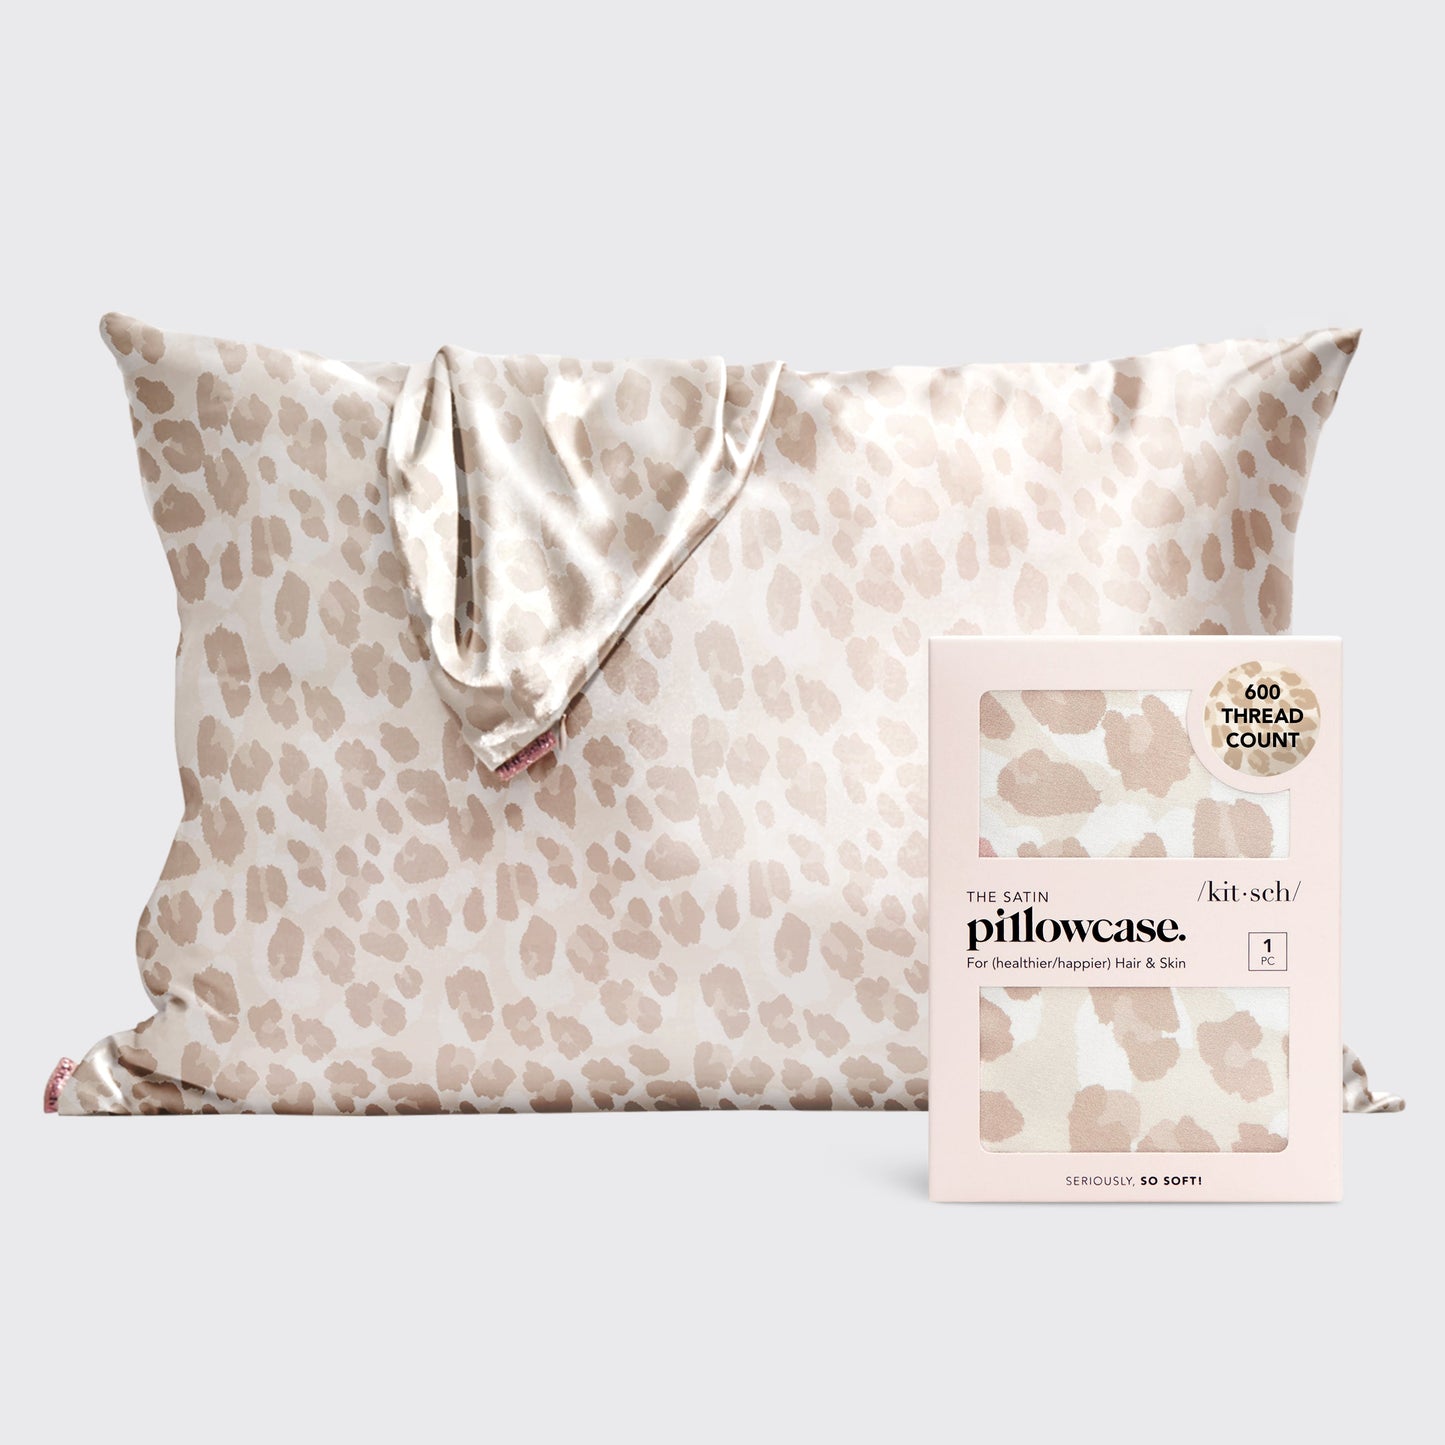 Satin Pillowcase by Kitsch